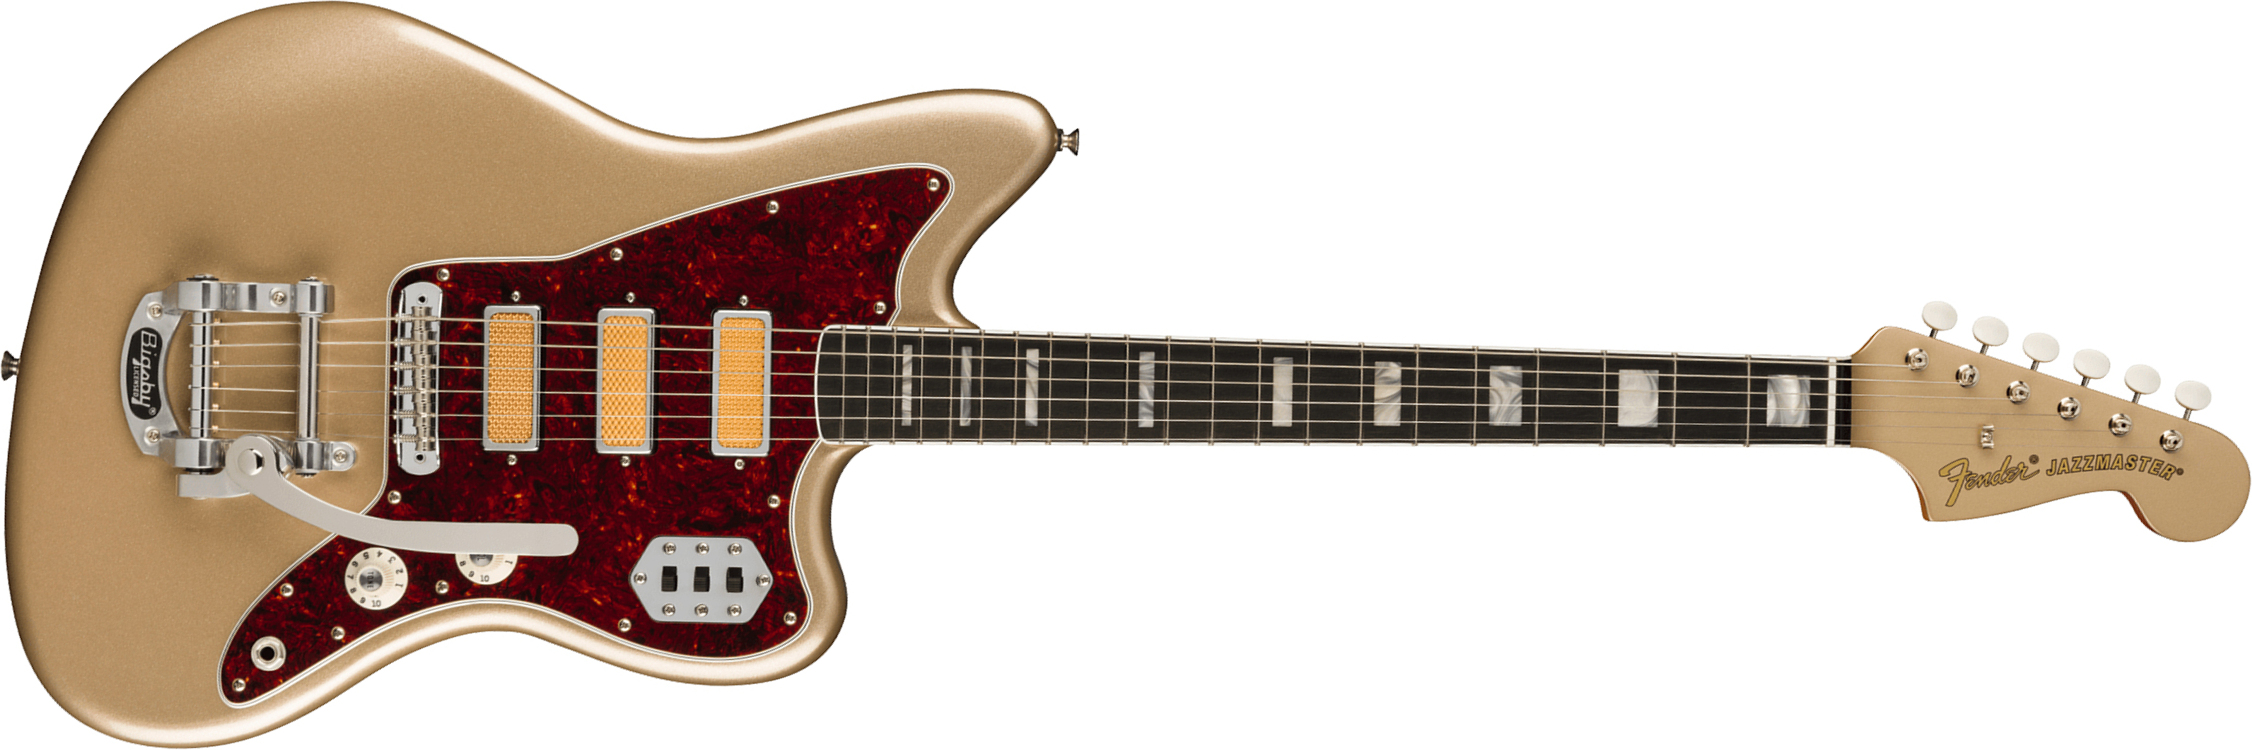 Fender Jazzmaster Gold Foil Ltd Mex 3mh Trem Bigsby Eb - Shoreline Gold - Retro rock electric guitar - Main picture